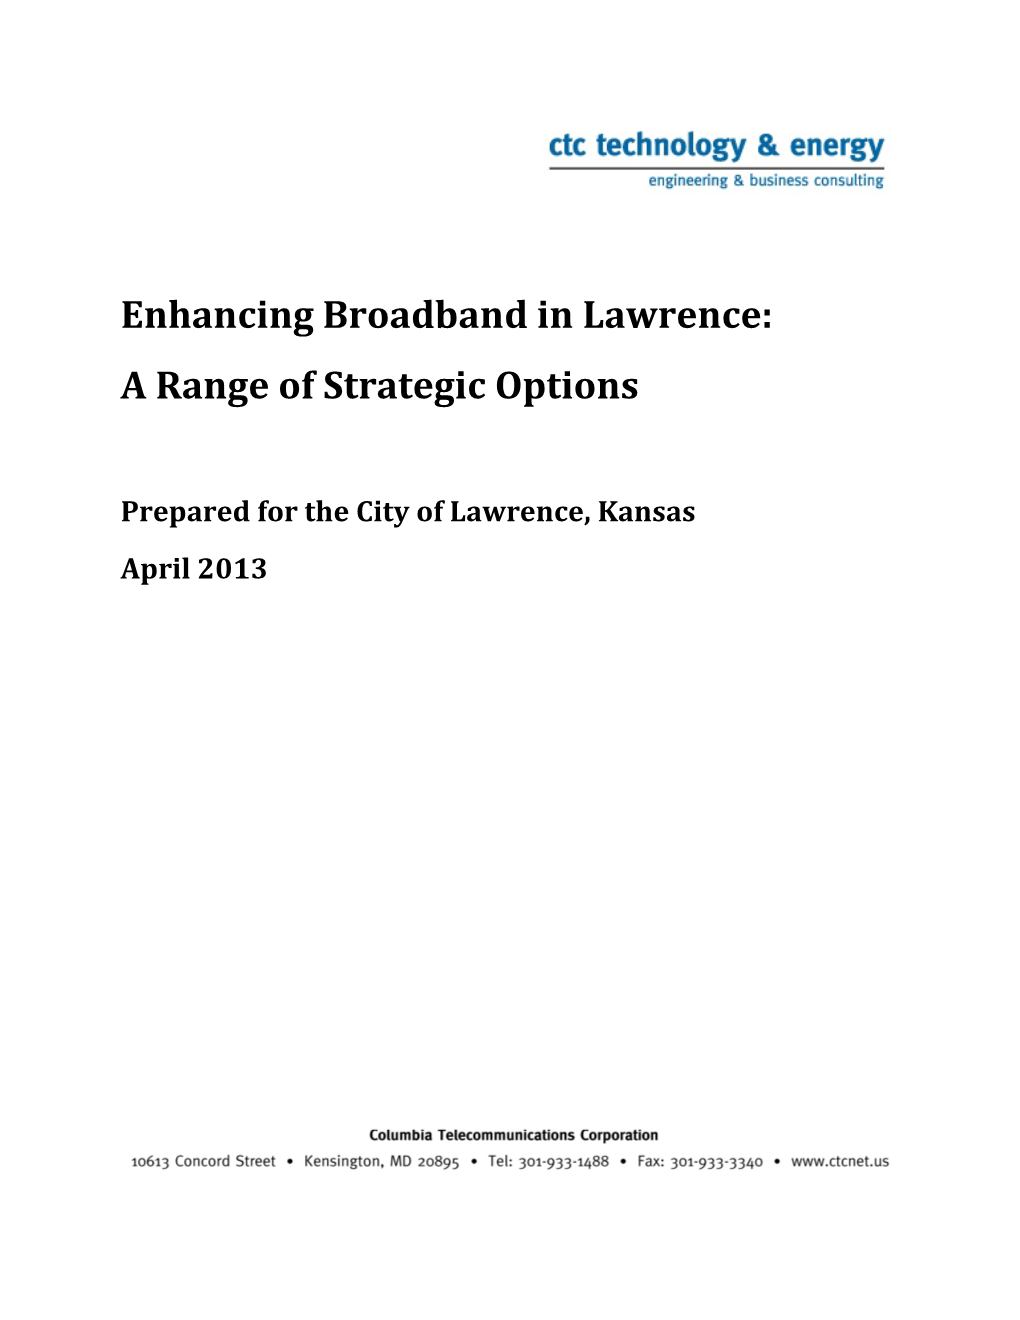 Enhancing Broadband in Lawrence: a Range of Strategic Options